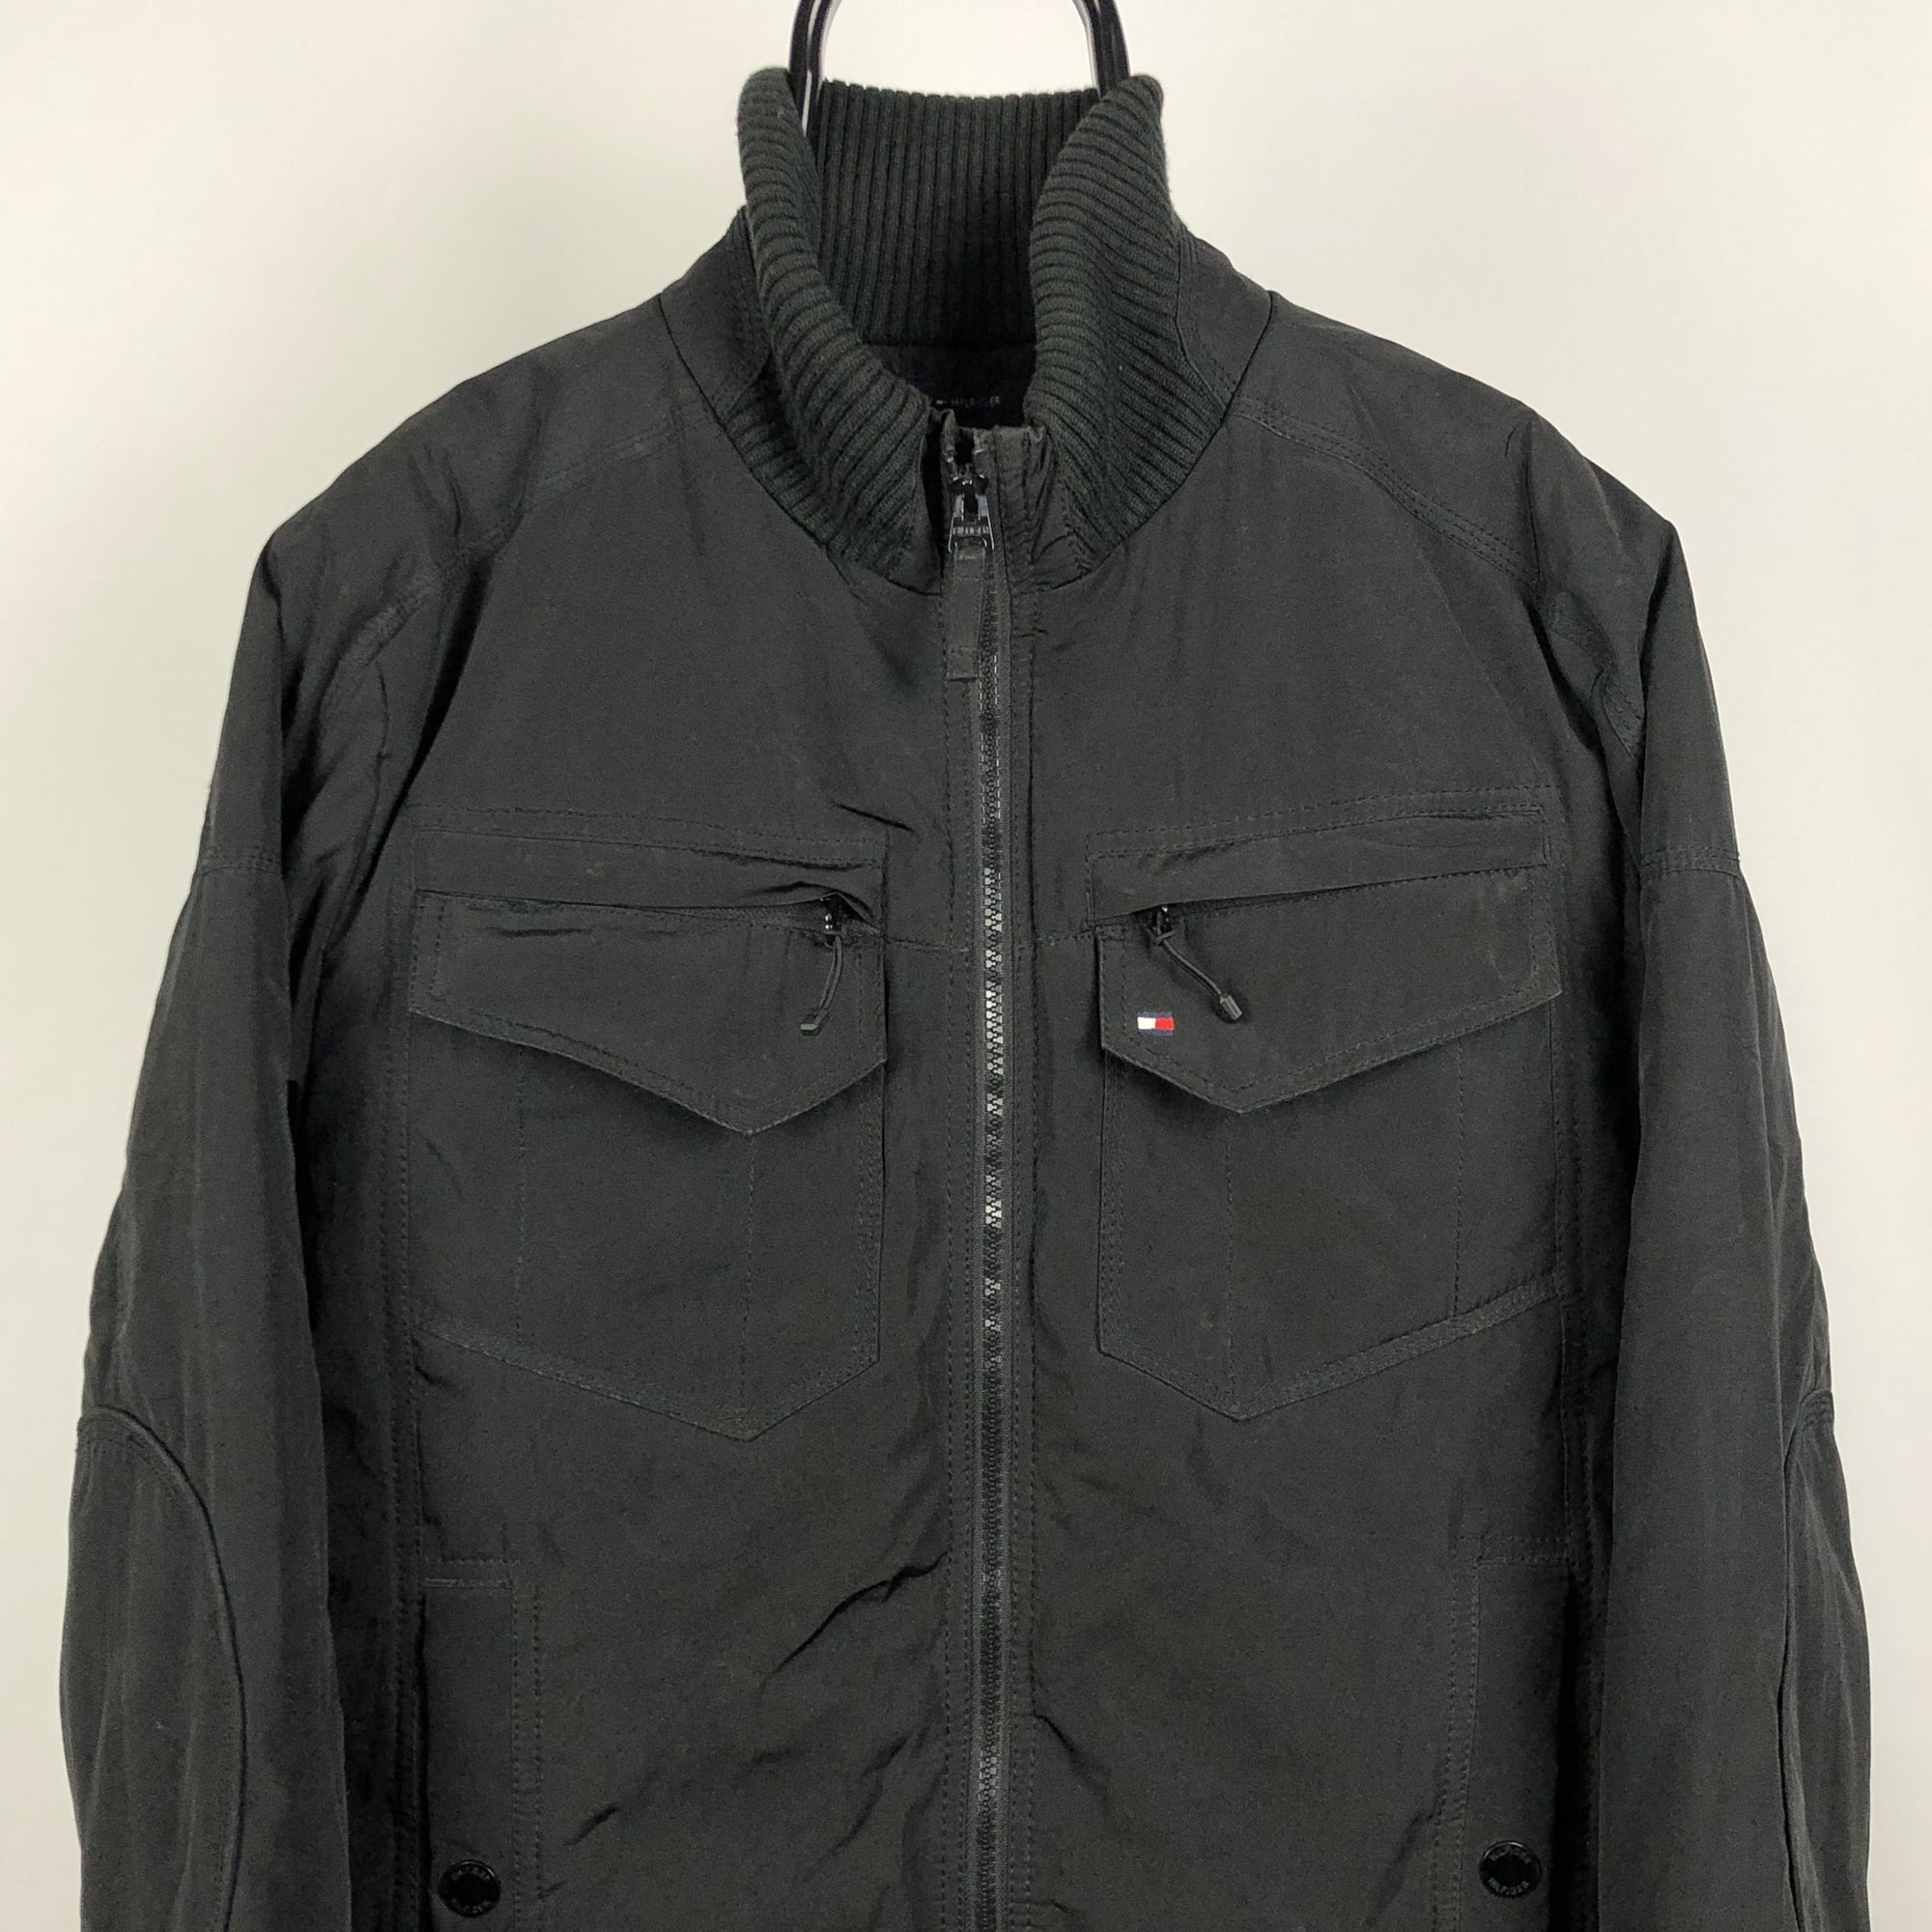 Tommy Hilfiger Lined Jacket in Black - Men's Large/Women's XL